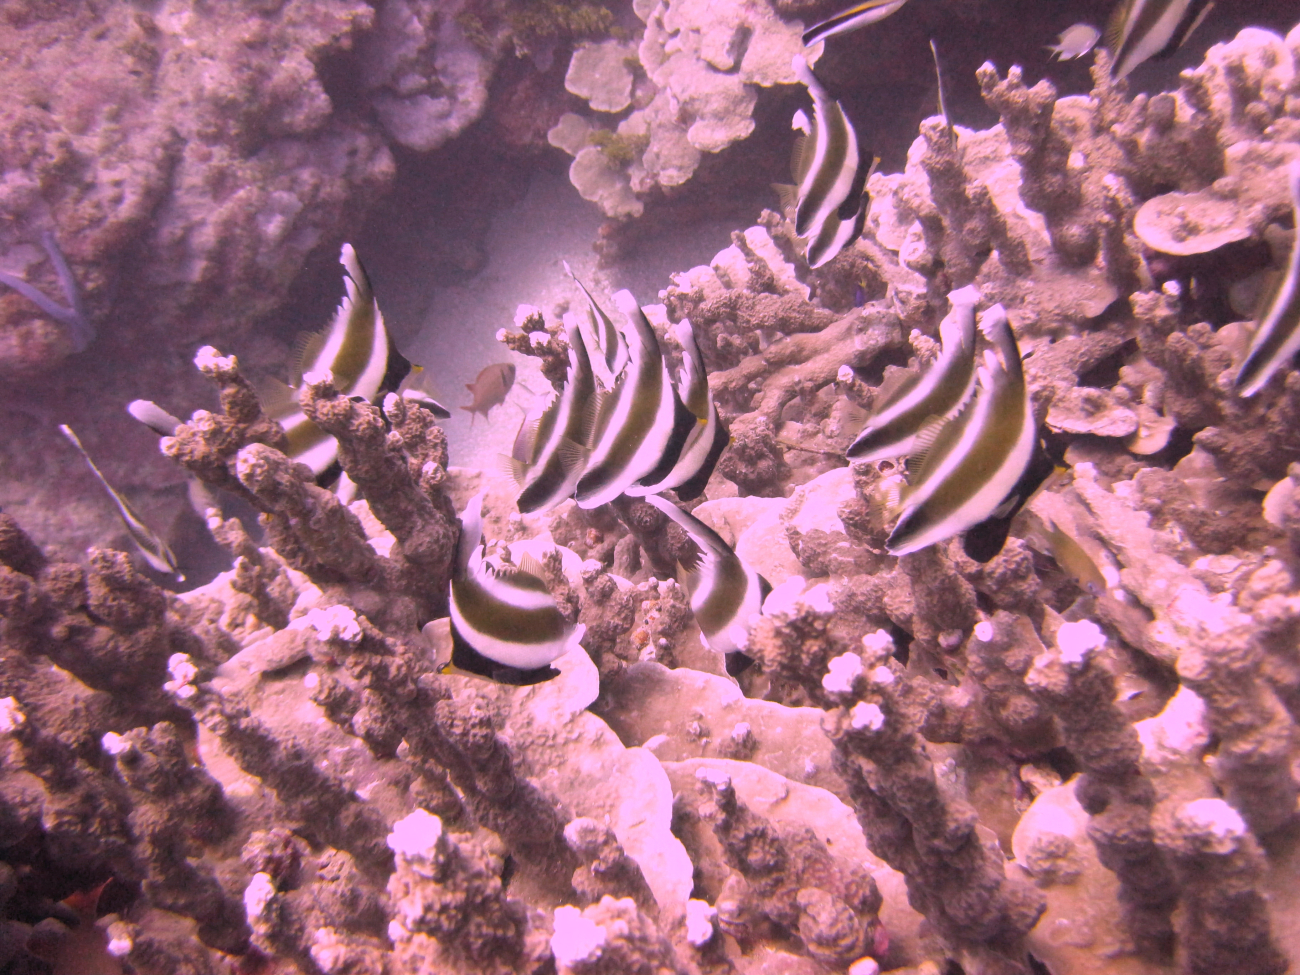 Threeband pennantfish (Heniochus chrysostomus)